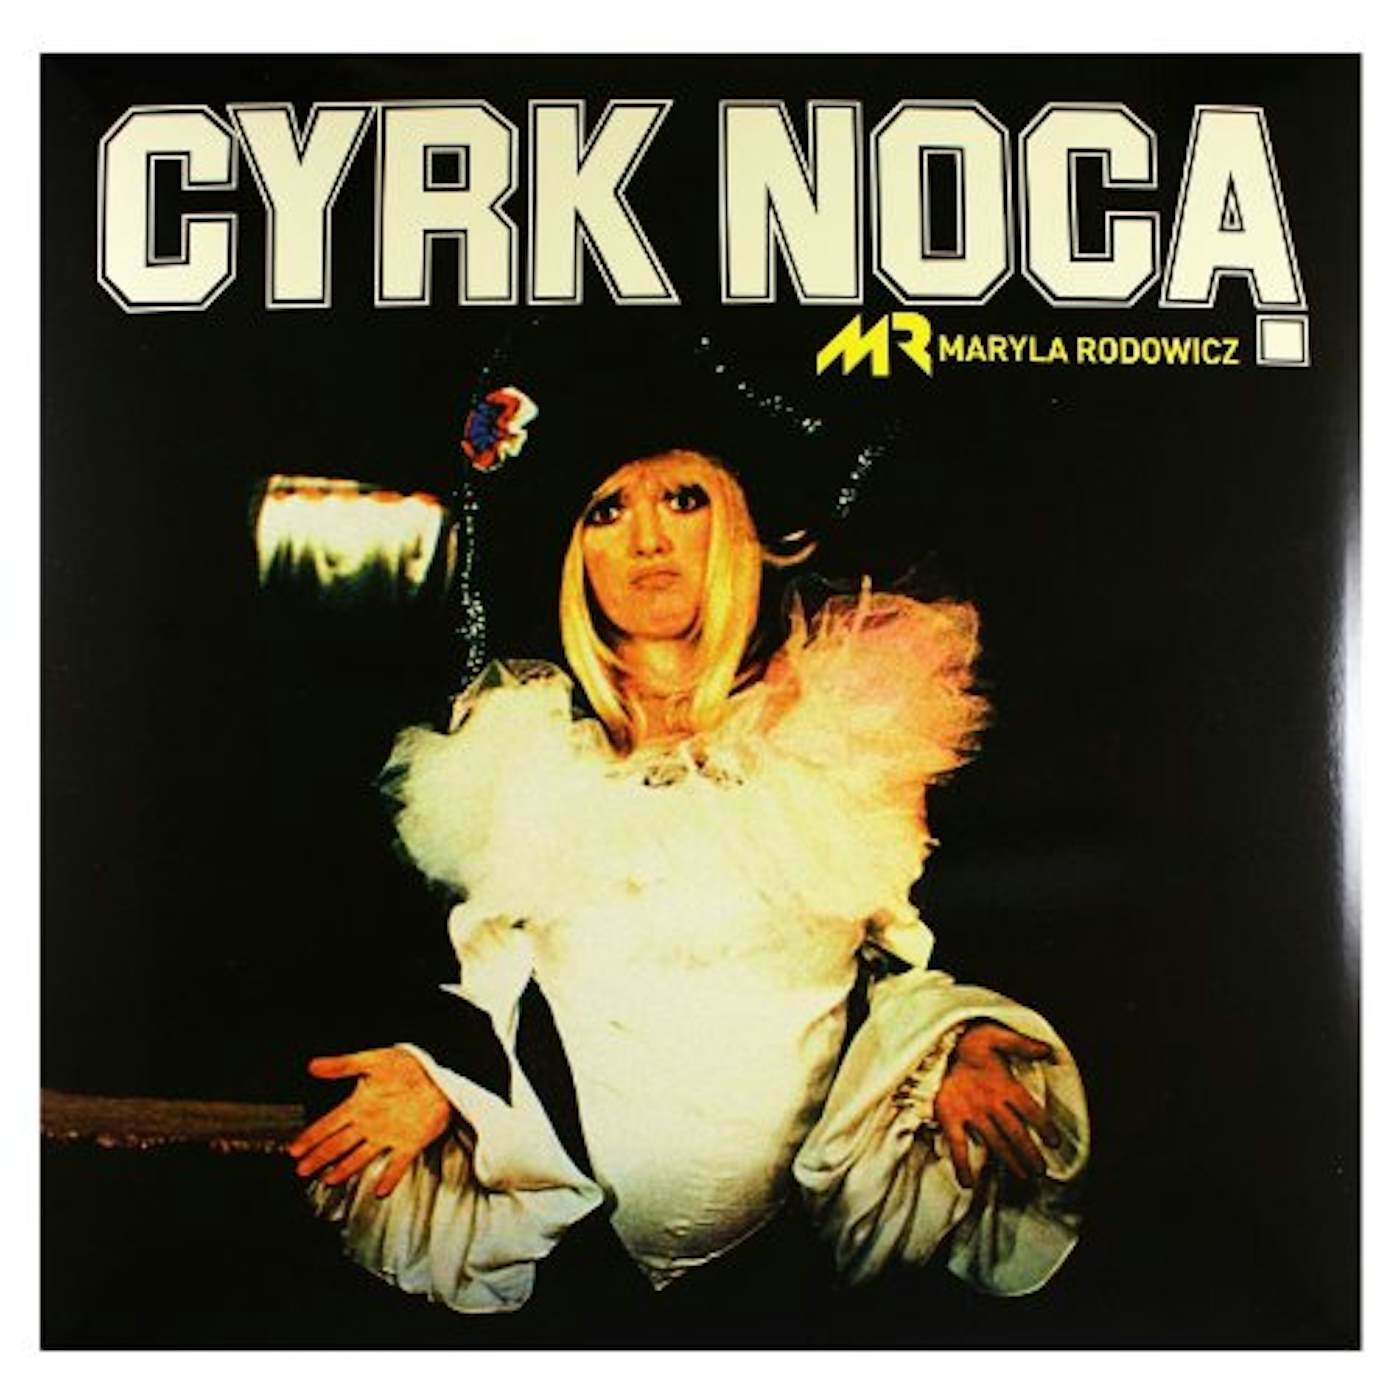 Maryla Rodowicz CYRK NOCA CD